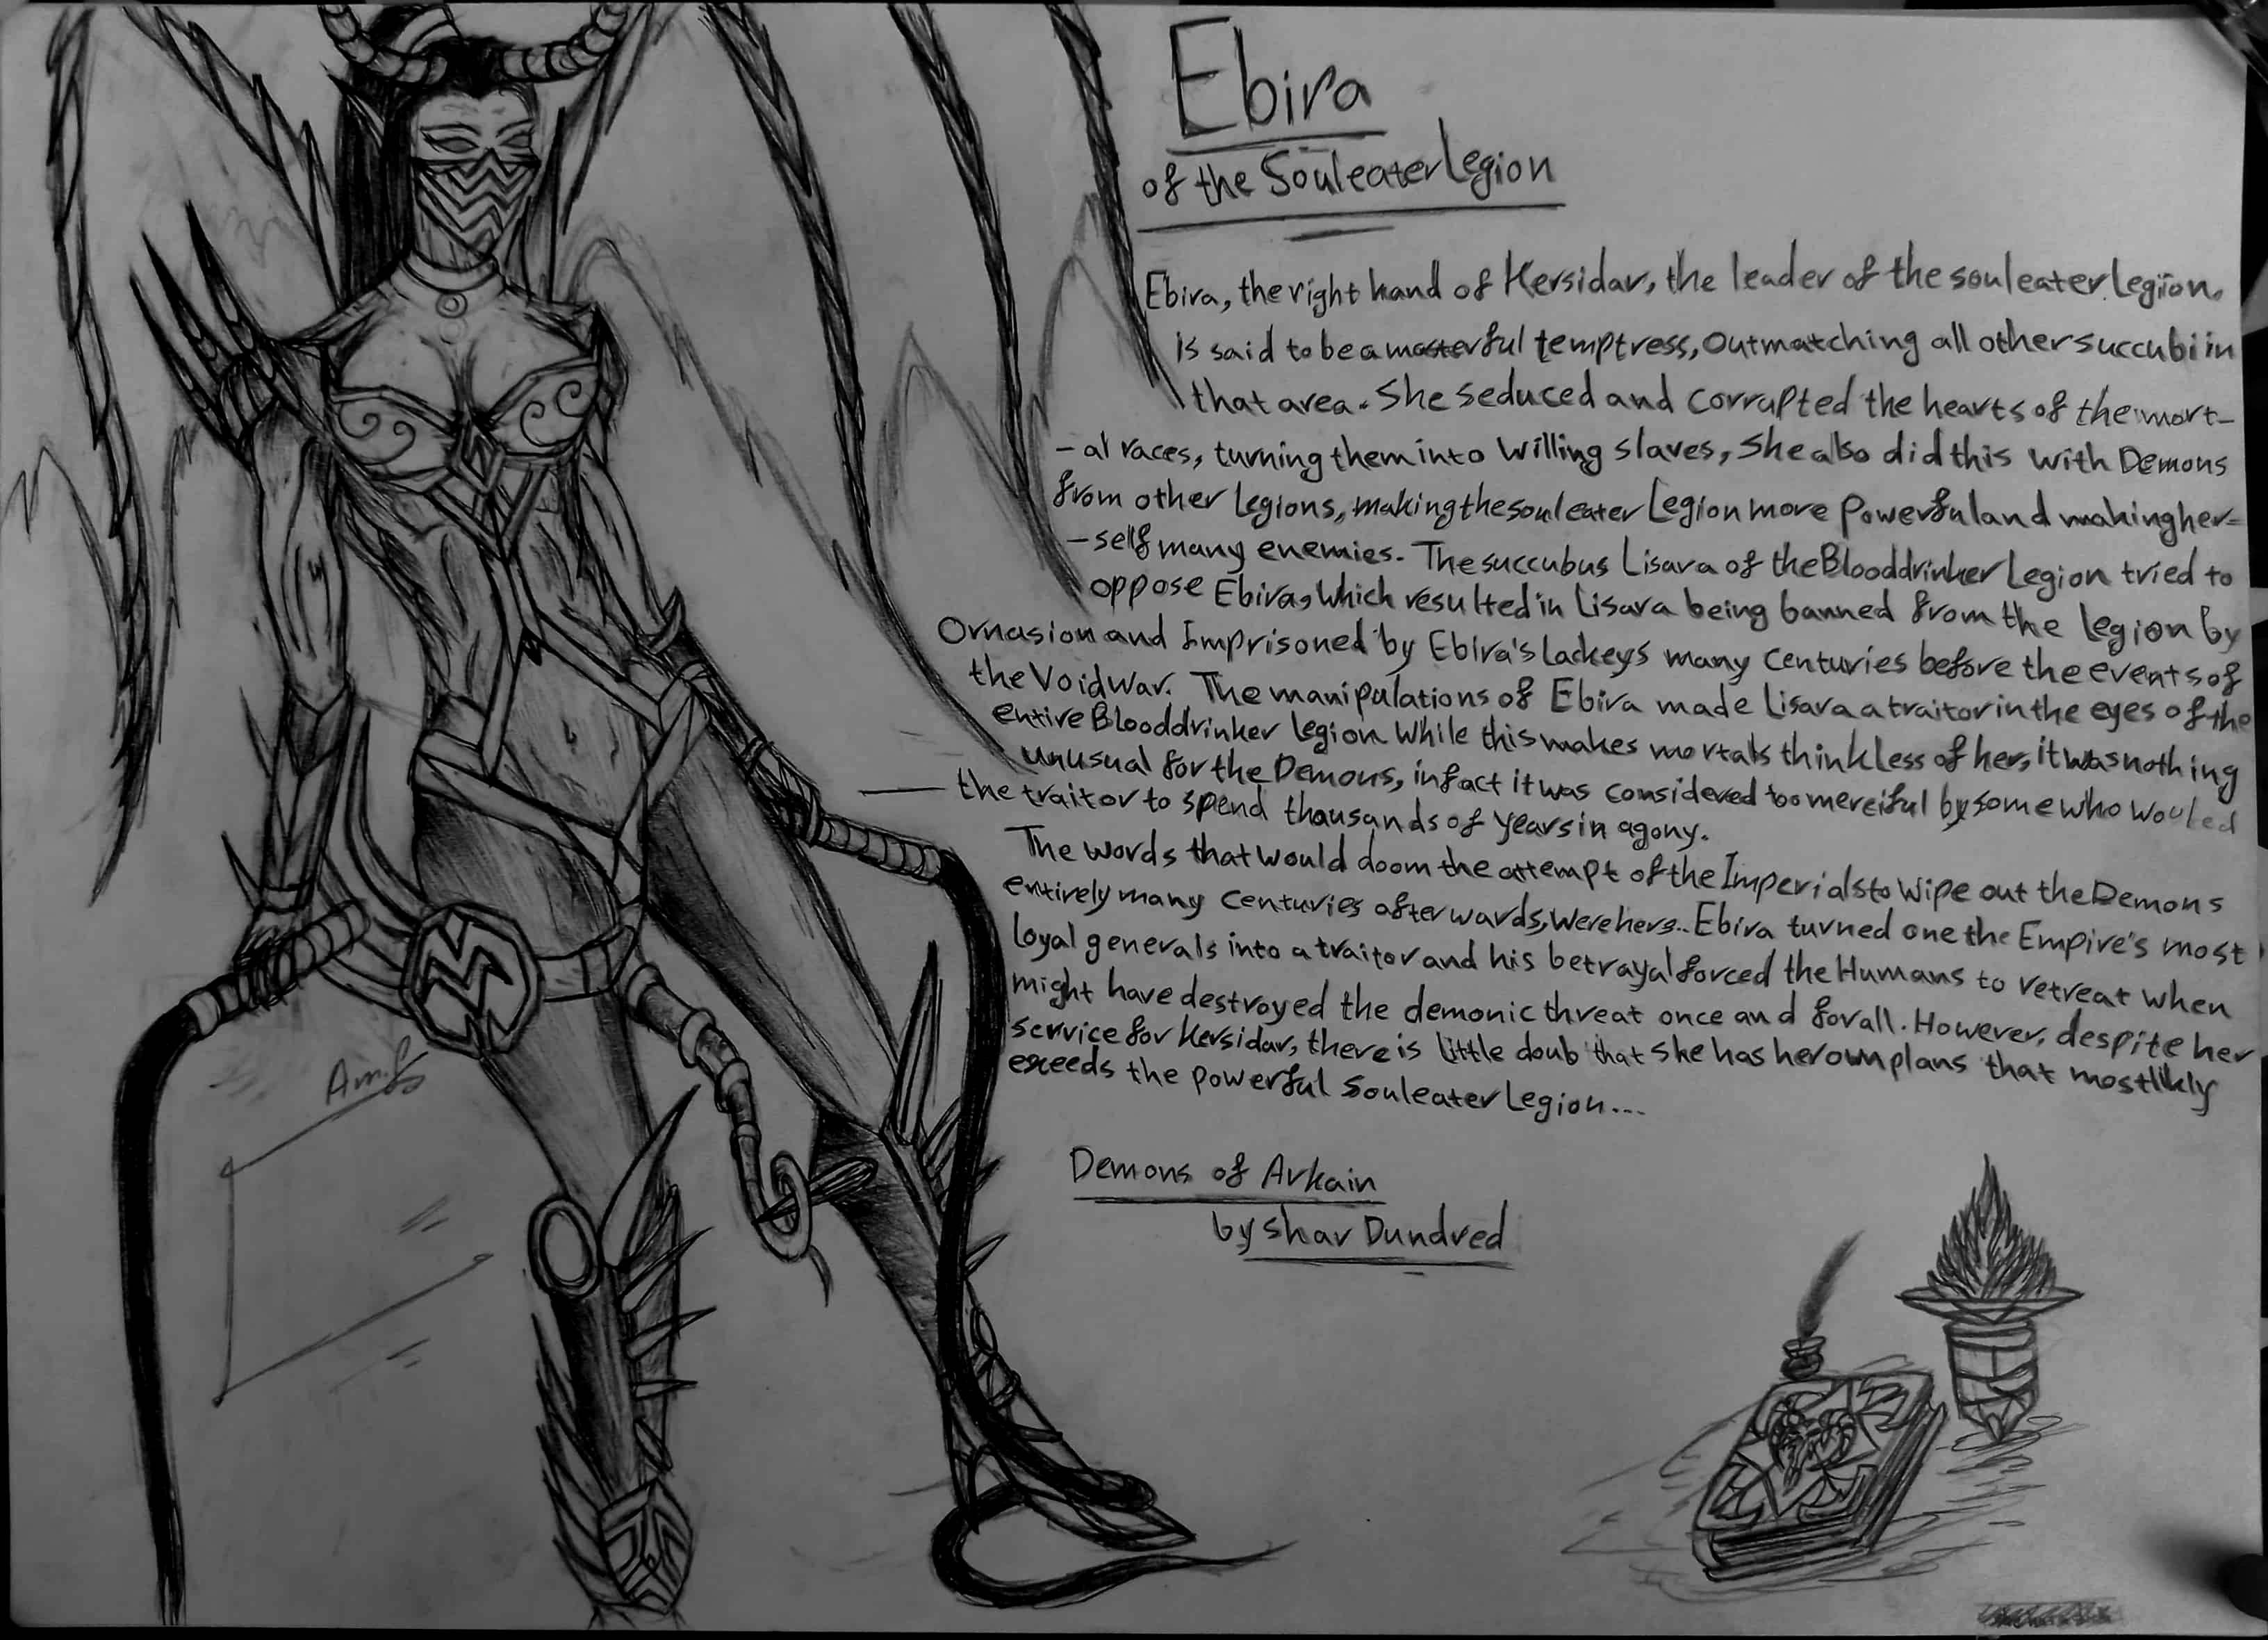 Ebira of the Souleater Legion